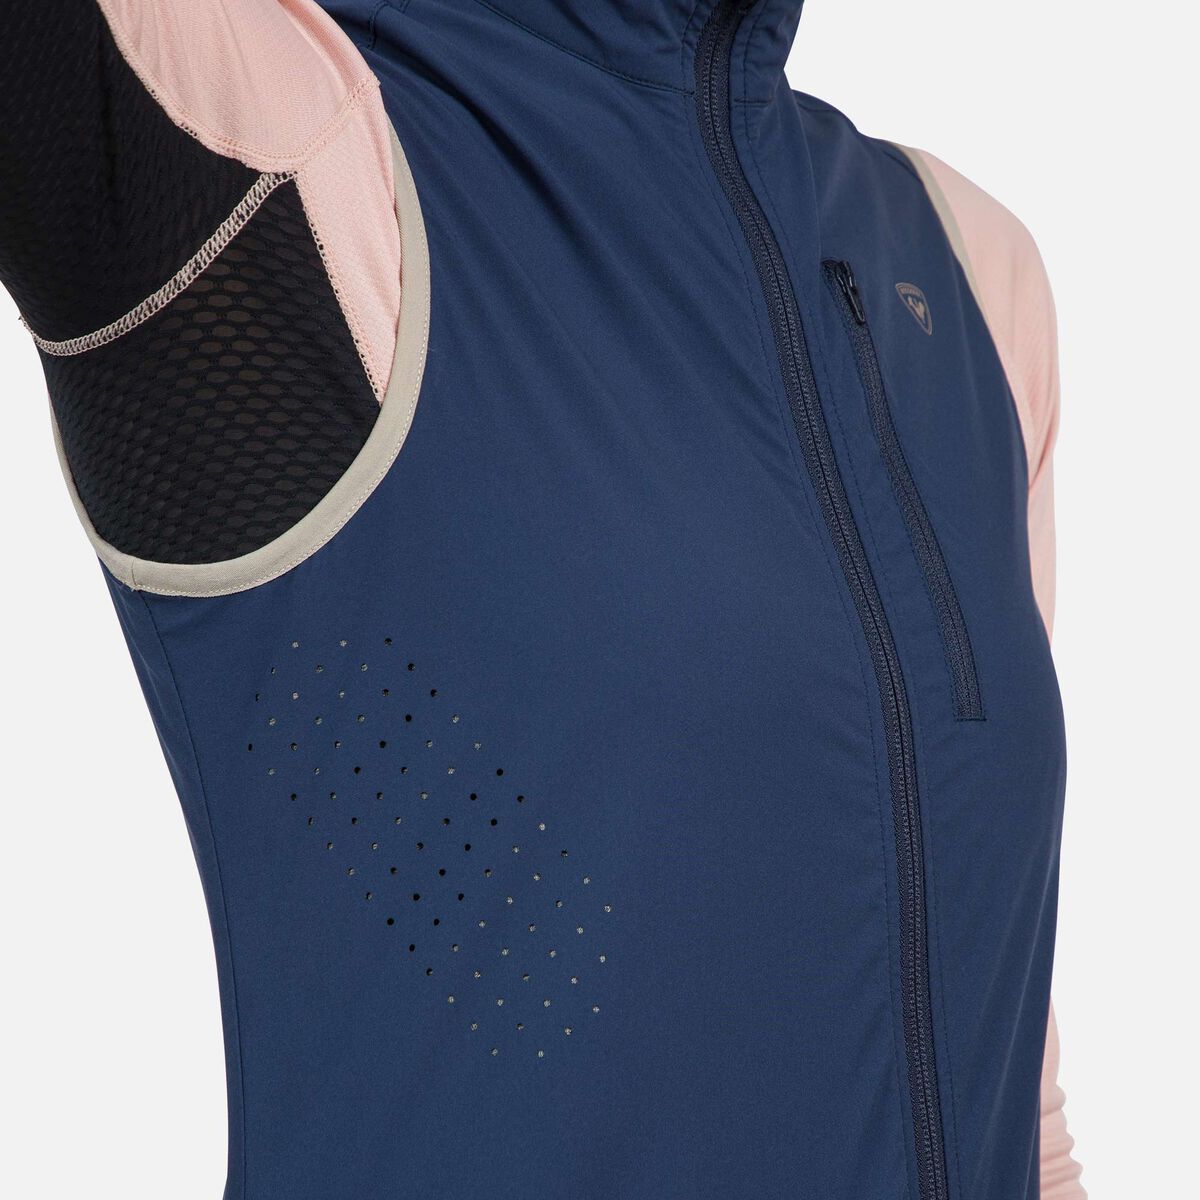 Women's Active Versatile XC Ski Vest